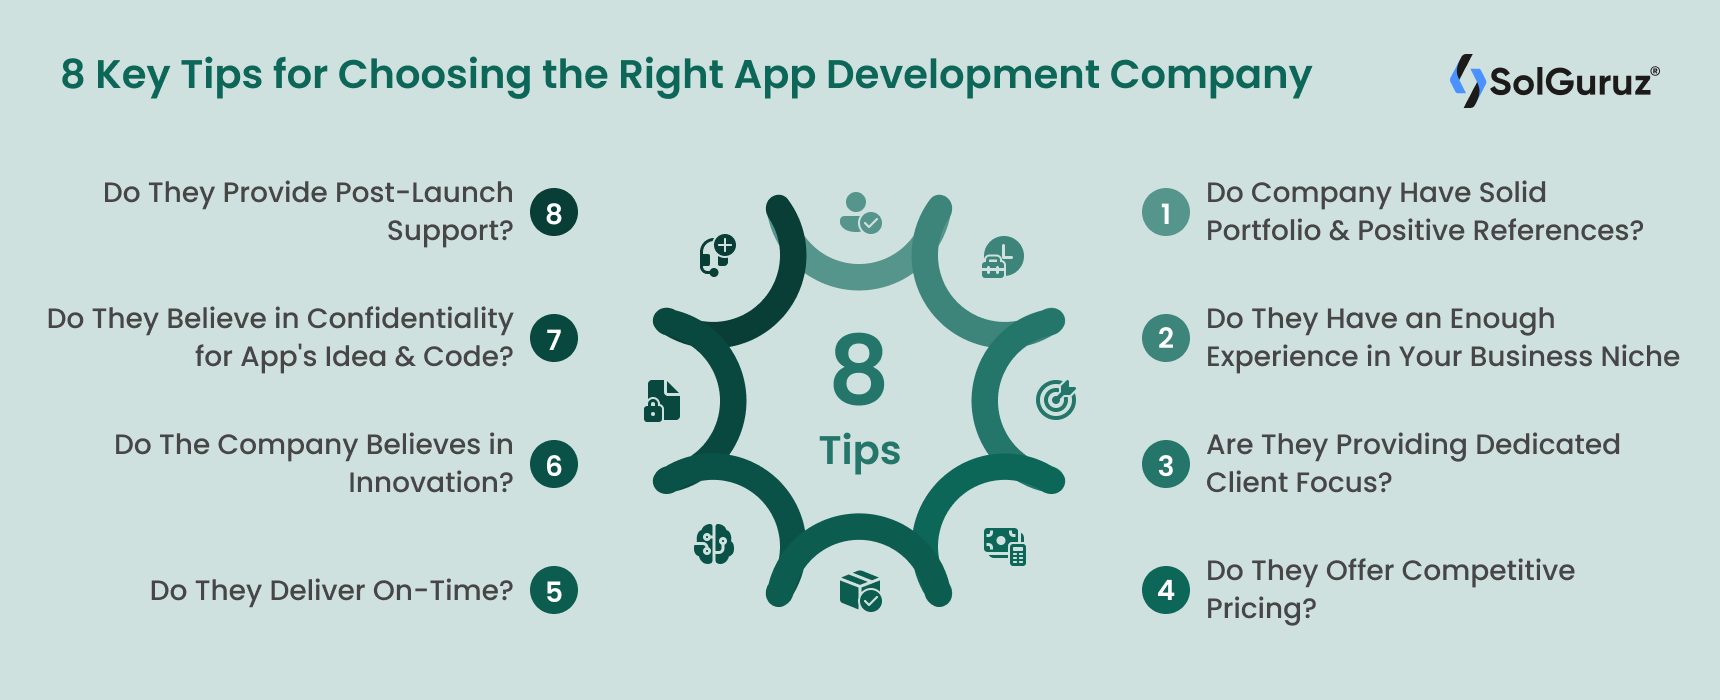 8 Key Tips for Choosing the Right App Development Company